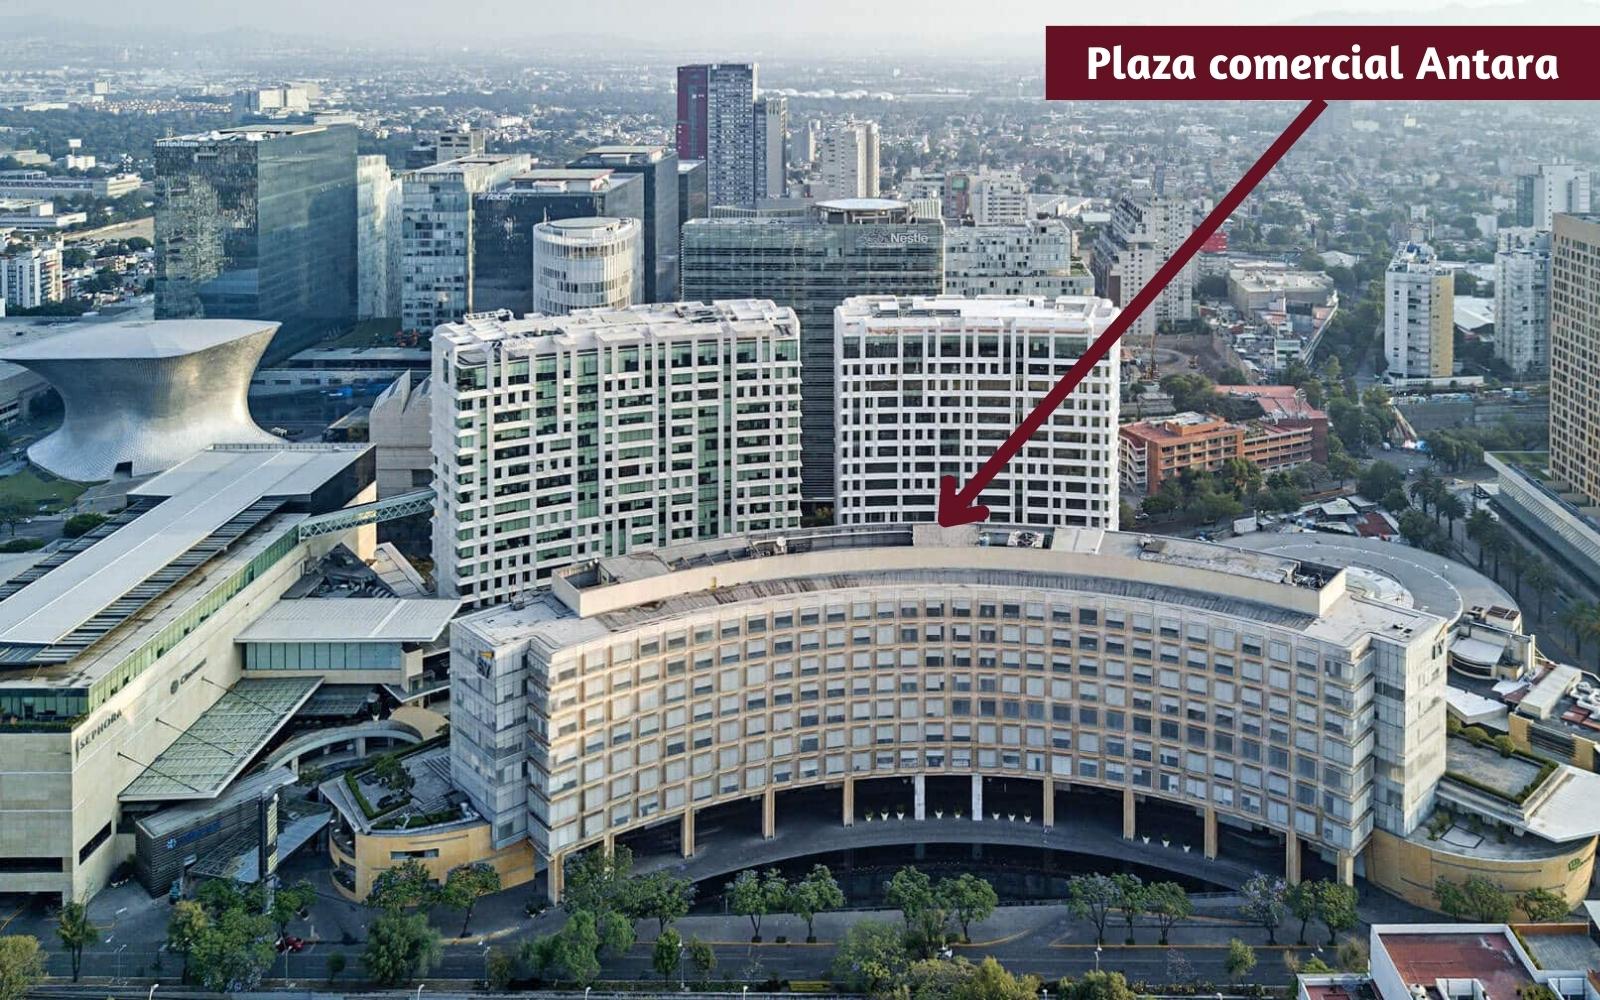 330 m2 condominium, pool, gym, for sale within Parque la Mexicana.